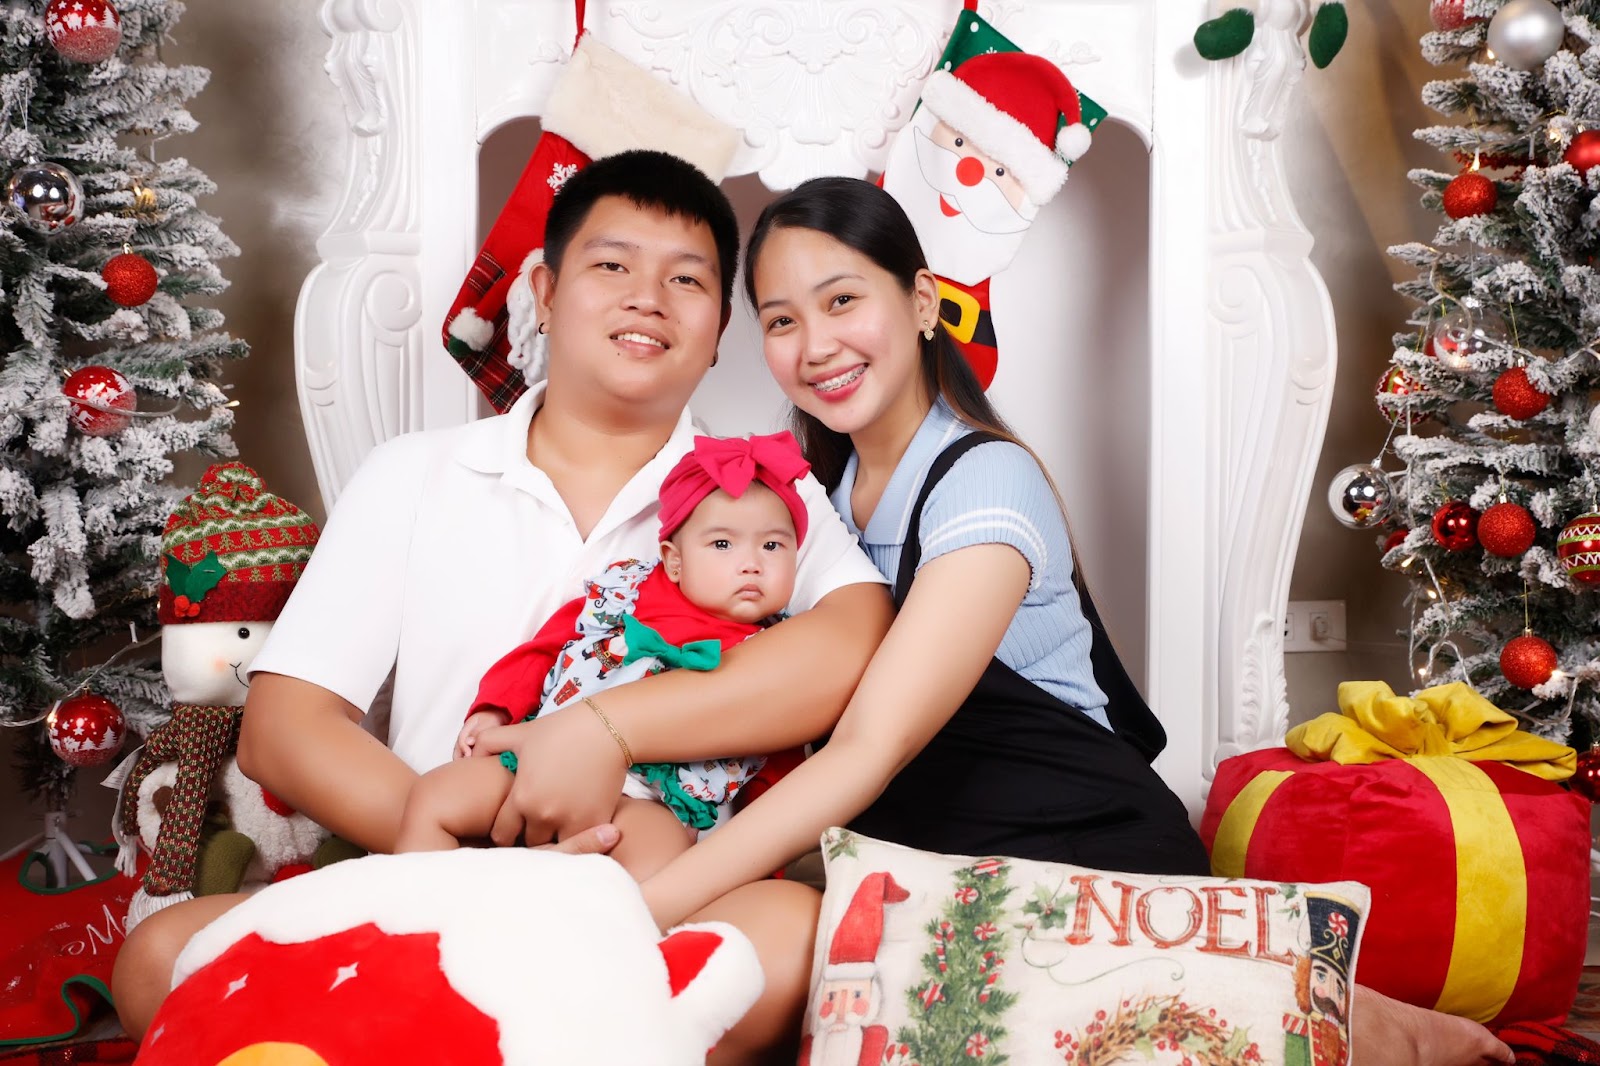 newborn christmas photo idea: newborn dressed in a cute Christmas dress posing with parents